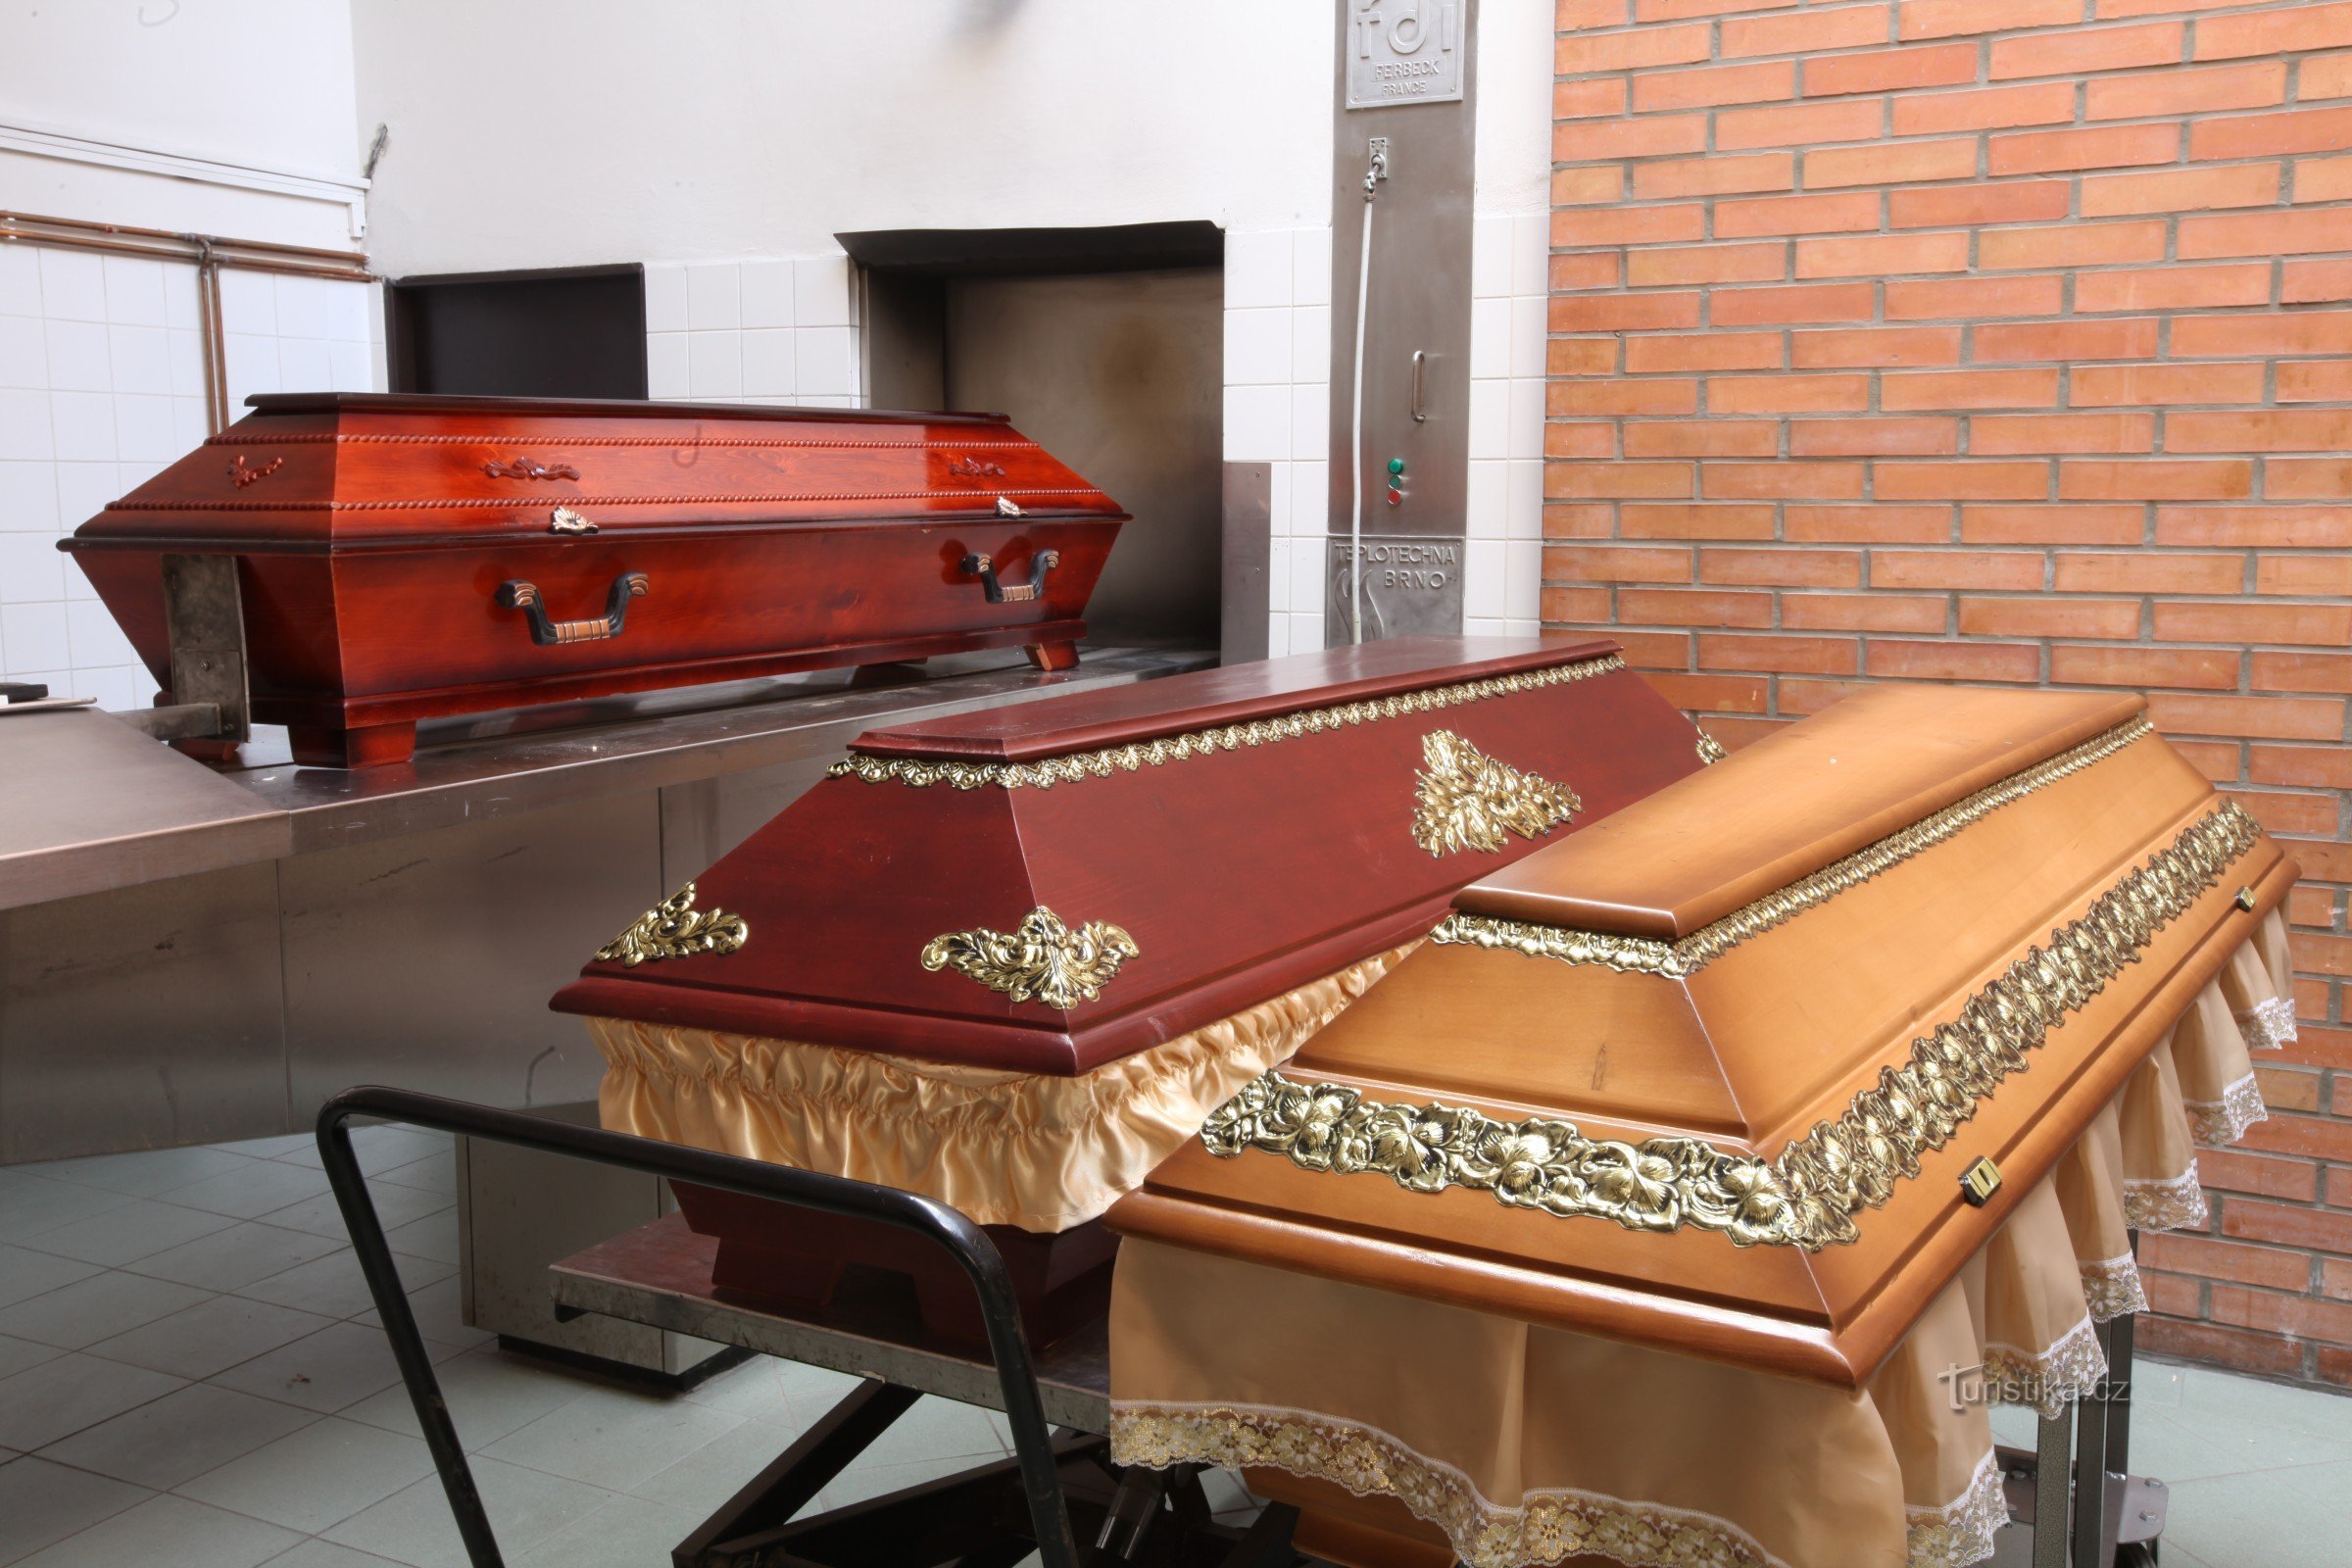 Krematorij Pardubice